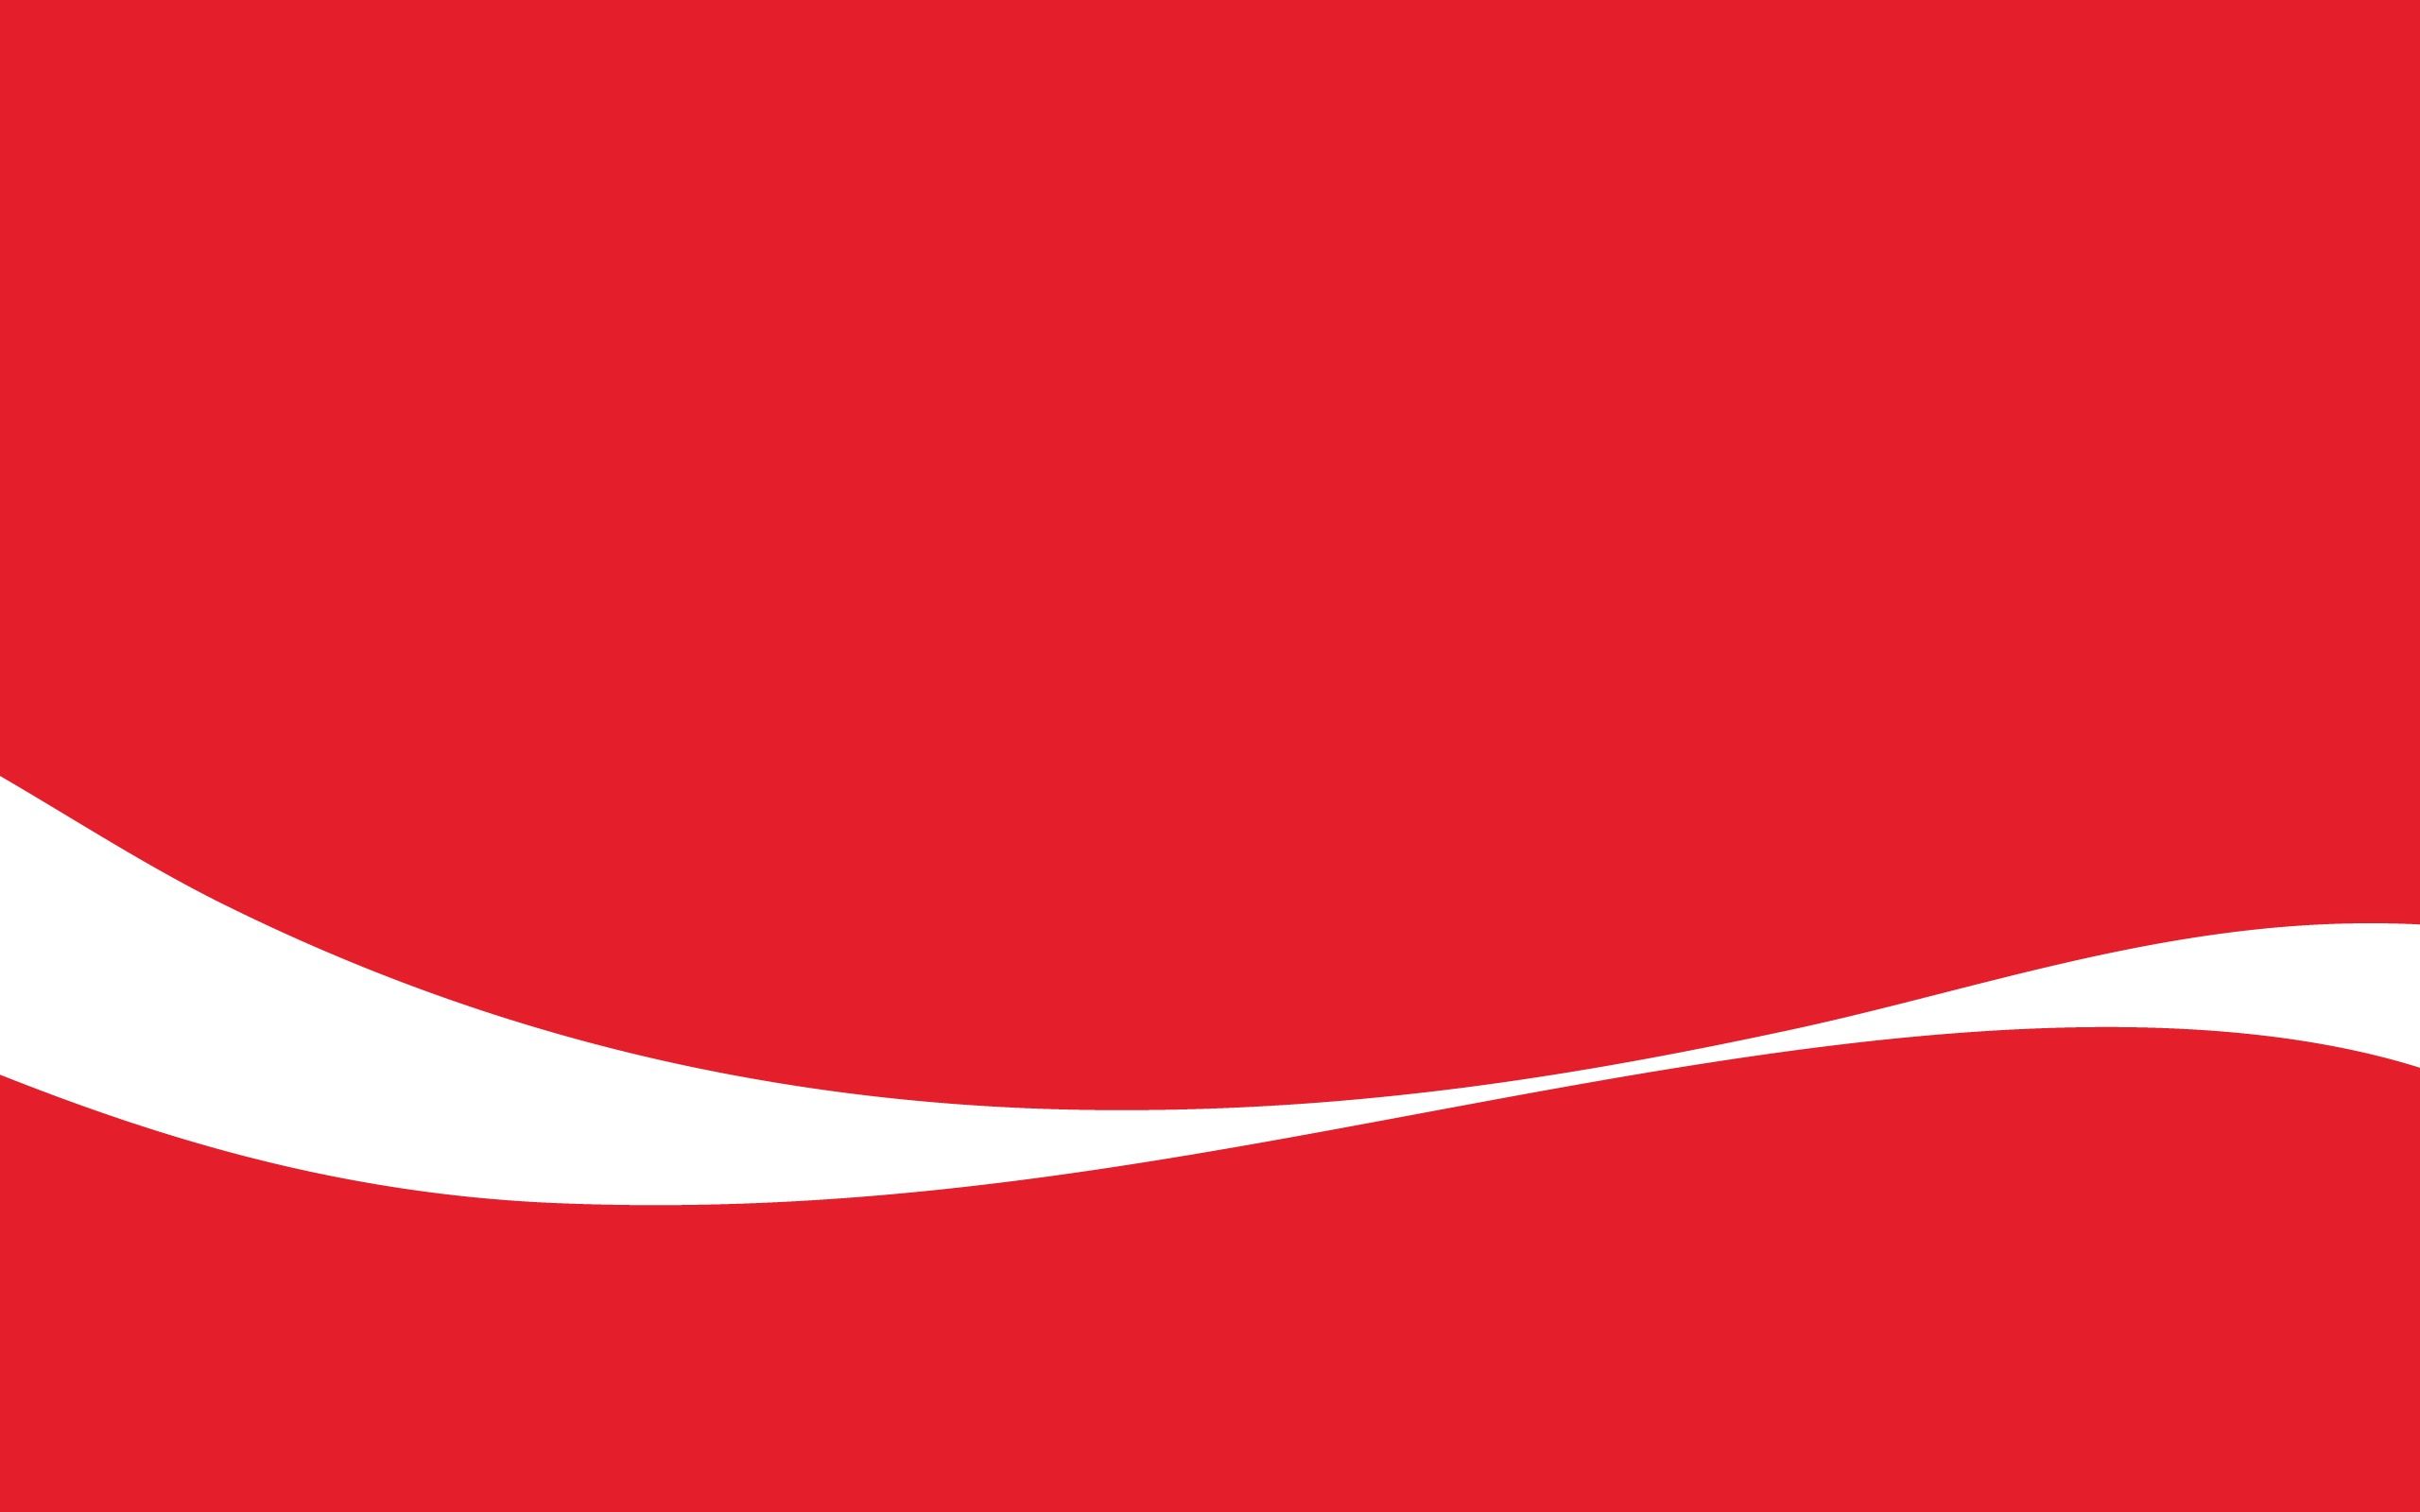 Coke Brand Design System